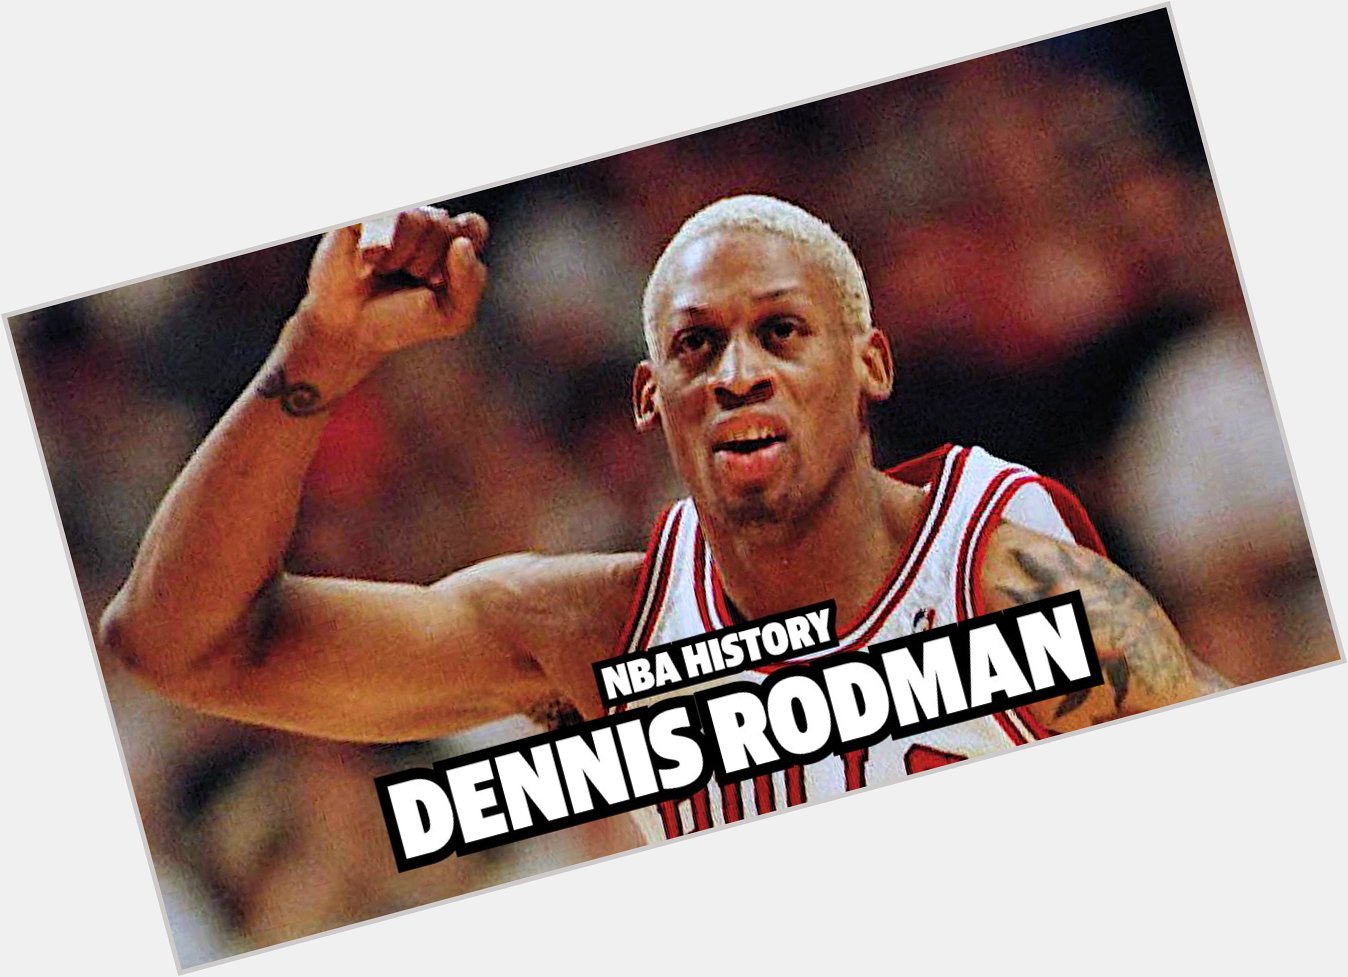 \"The greatest rebounder we have ever seen.\"

Happy Birthday to Dennis Rodman! 